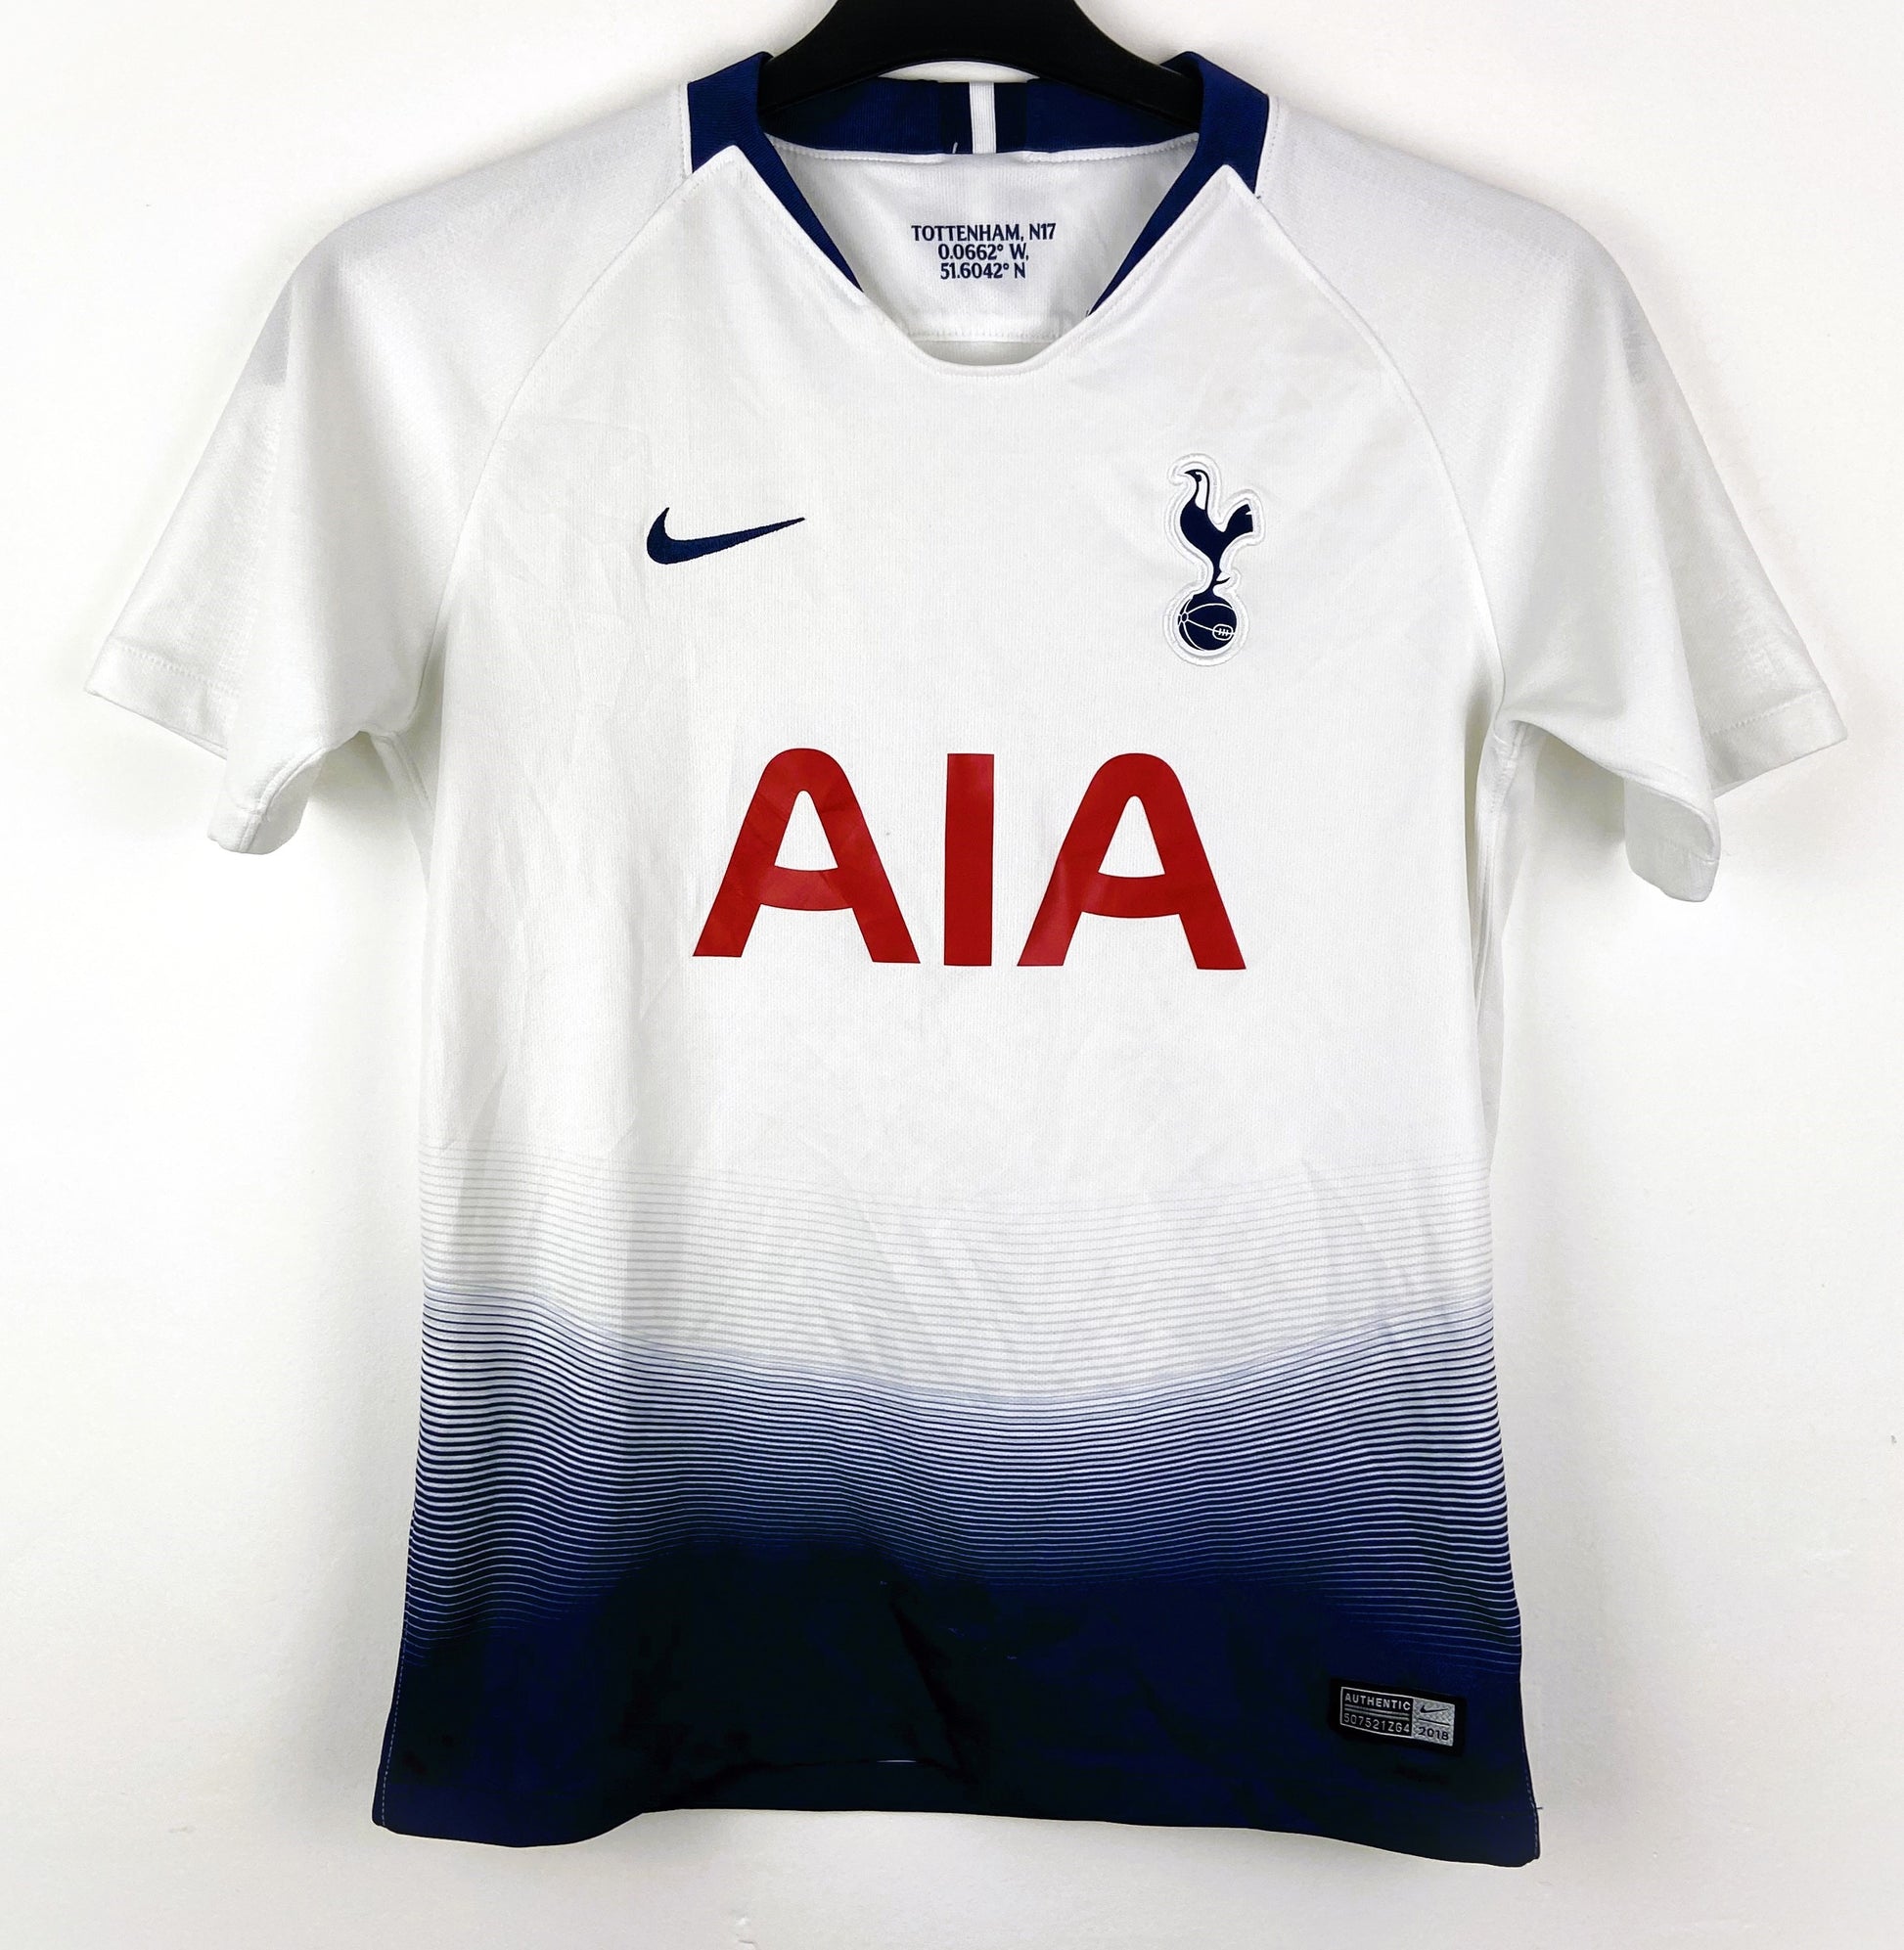 Tottenham Home Shirt 2019/20